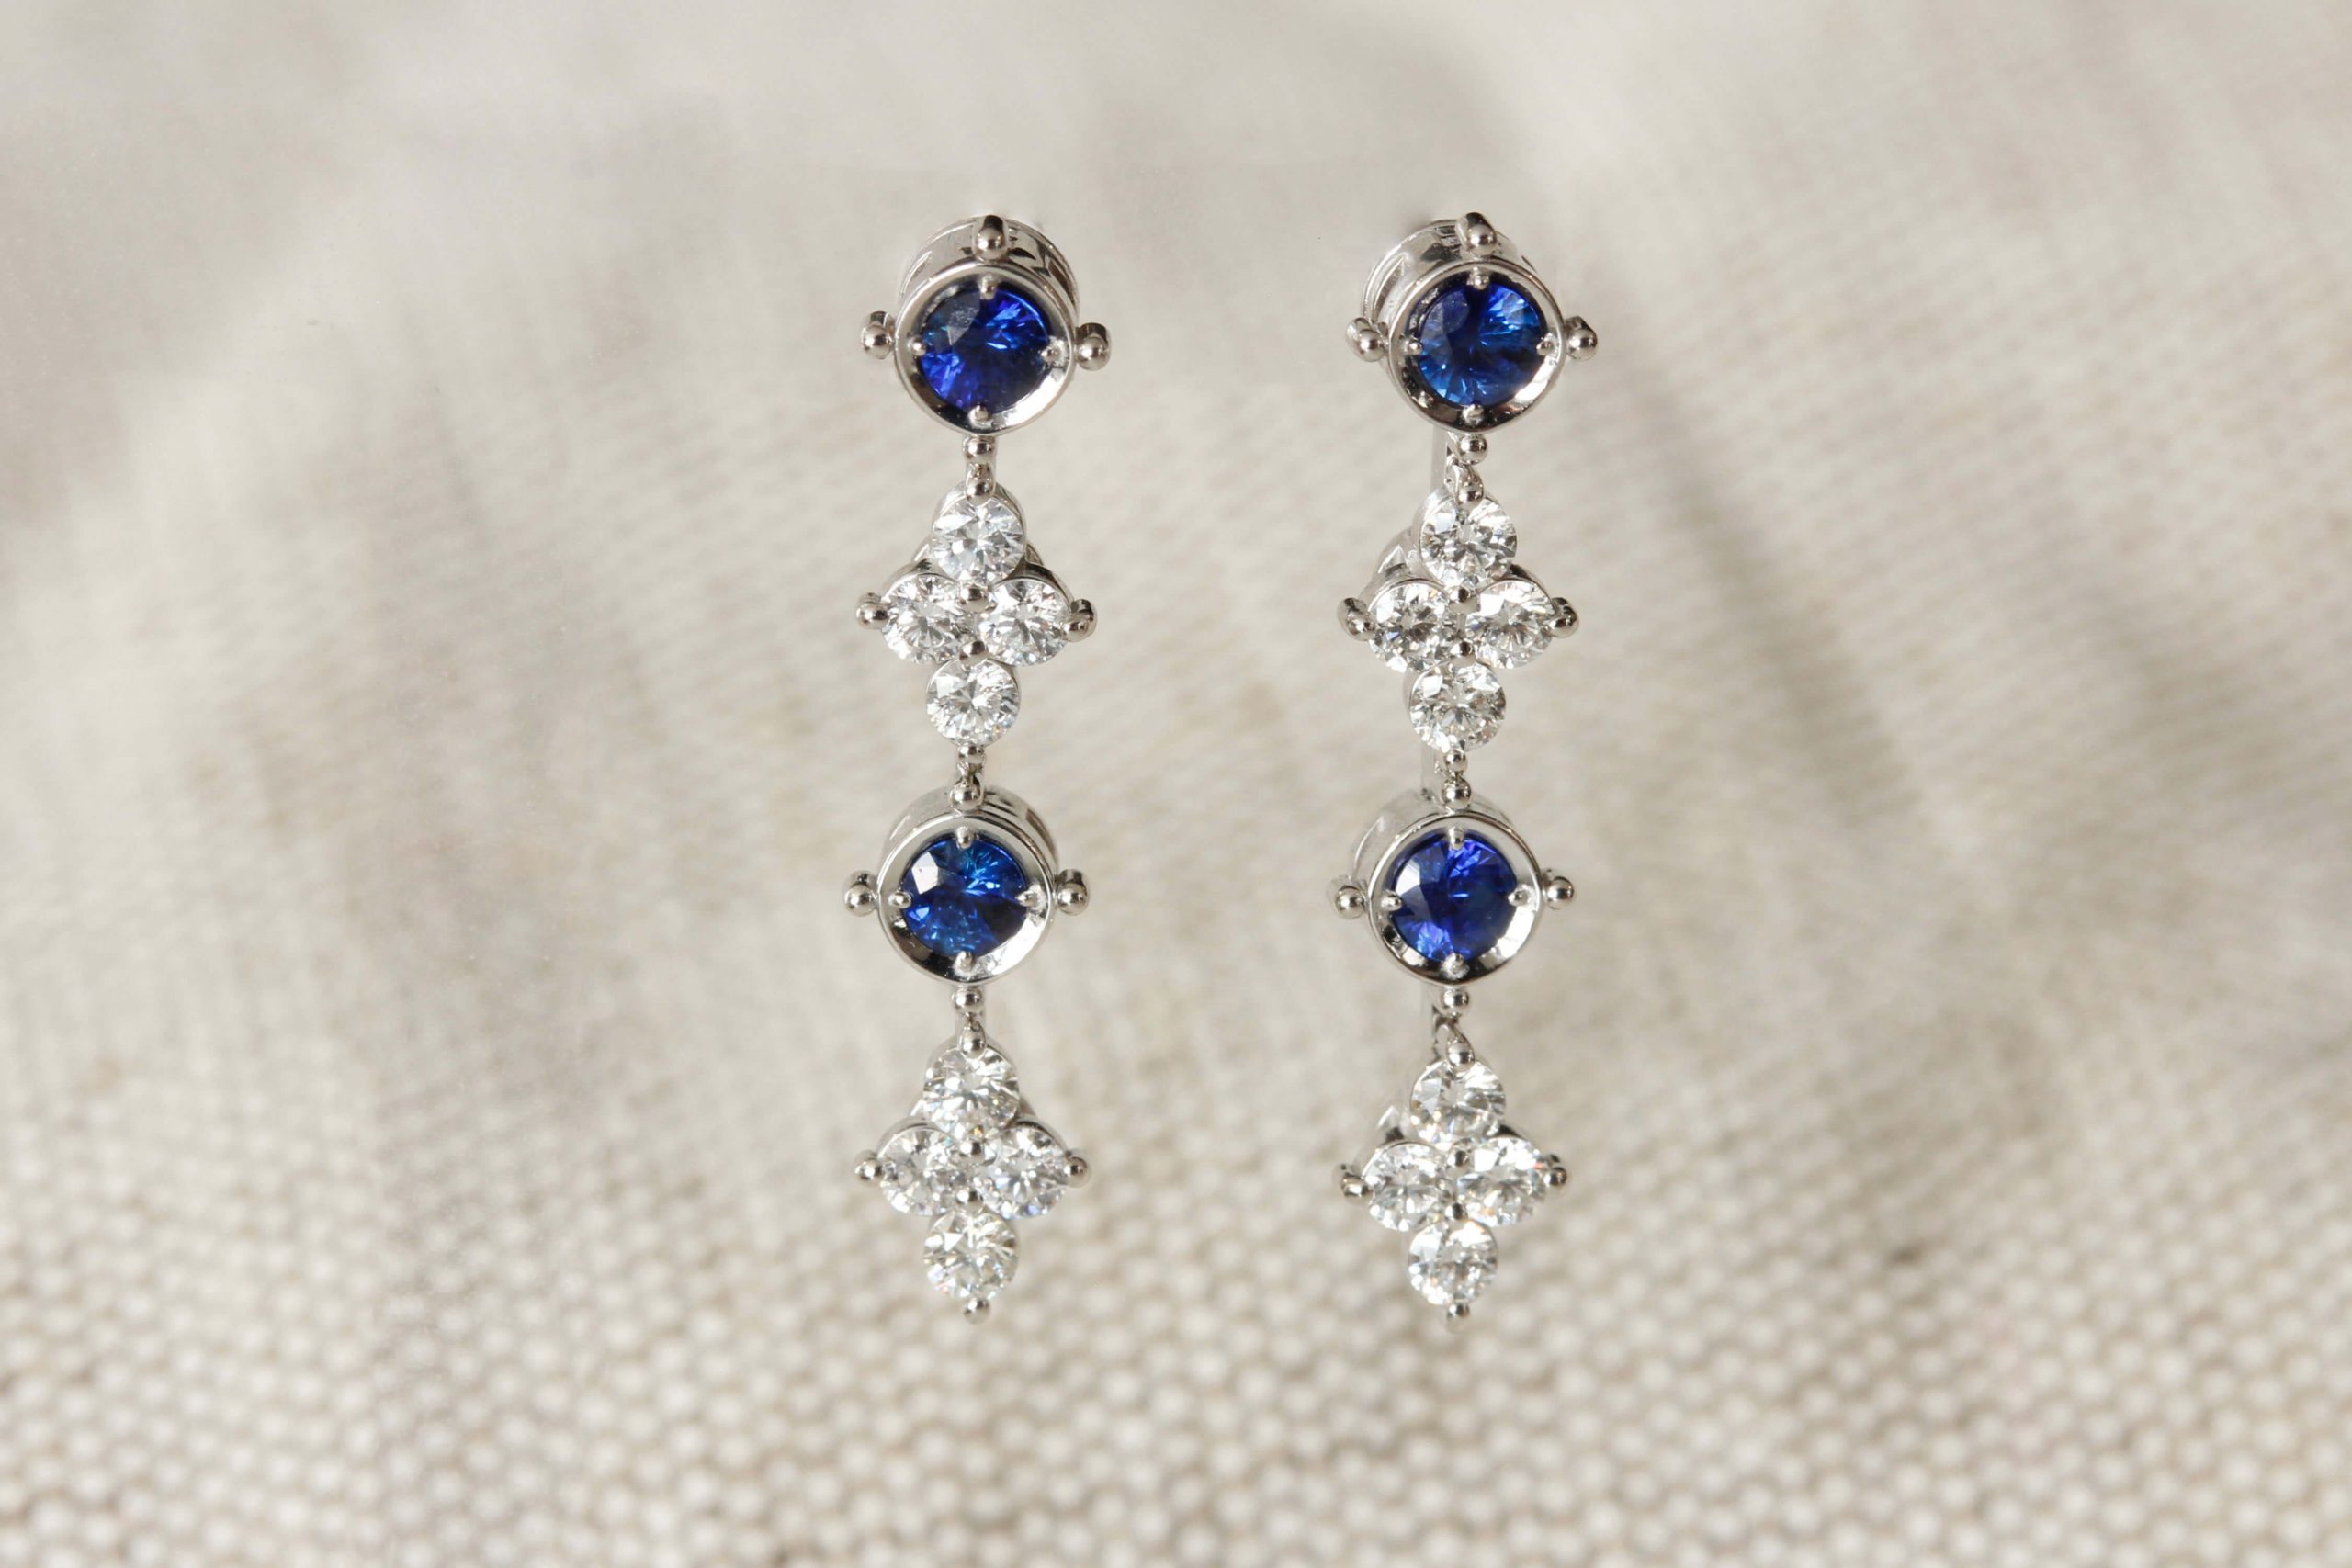 Sapphire and diamond drop earrings from Robert Gatward Jewellers